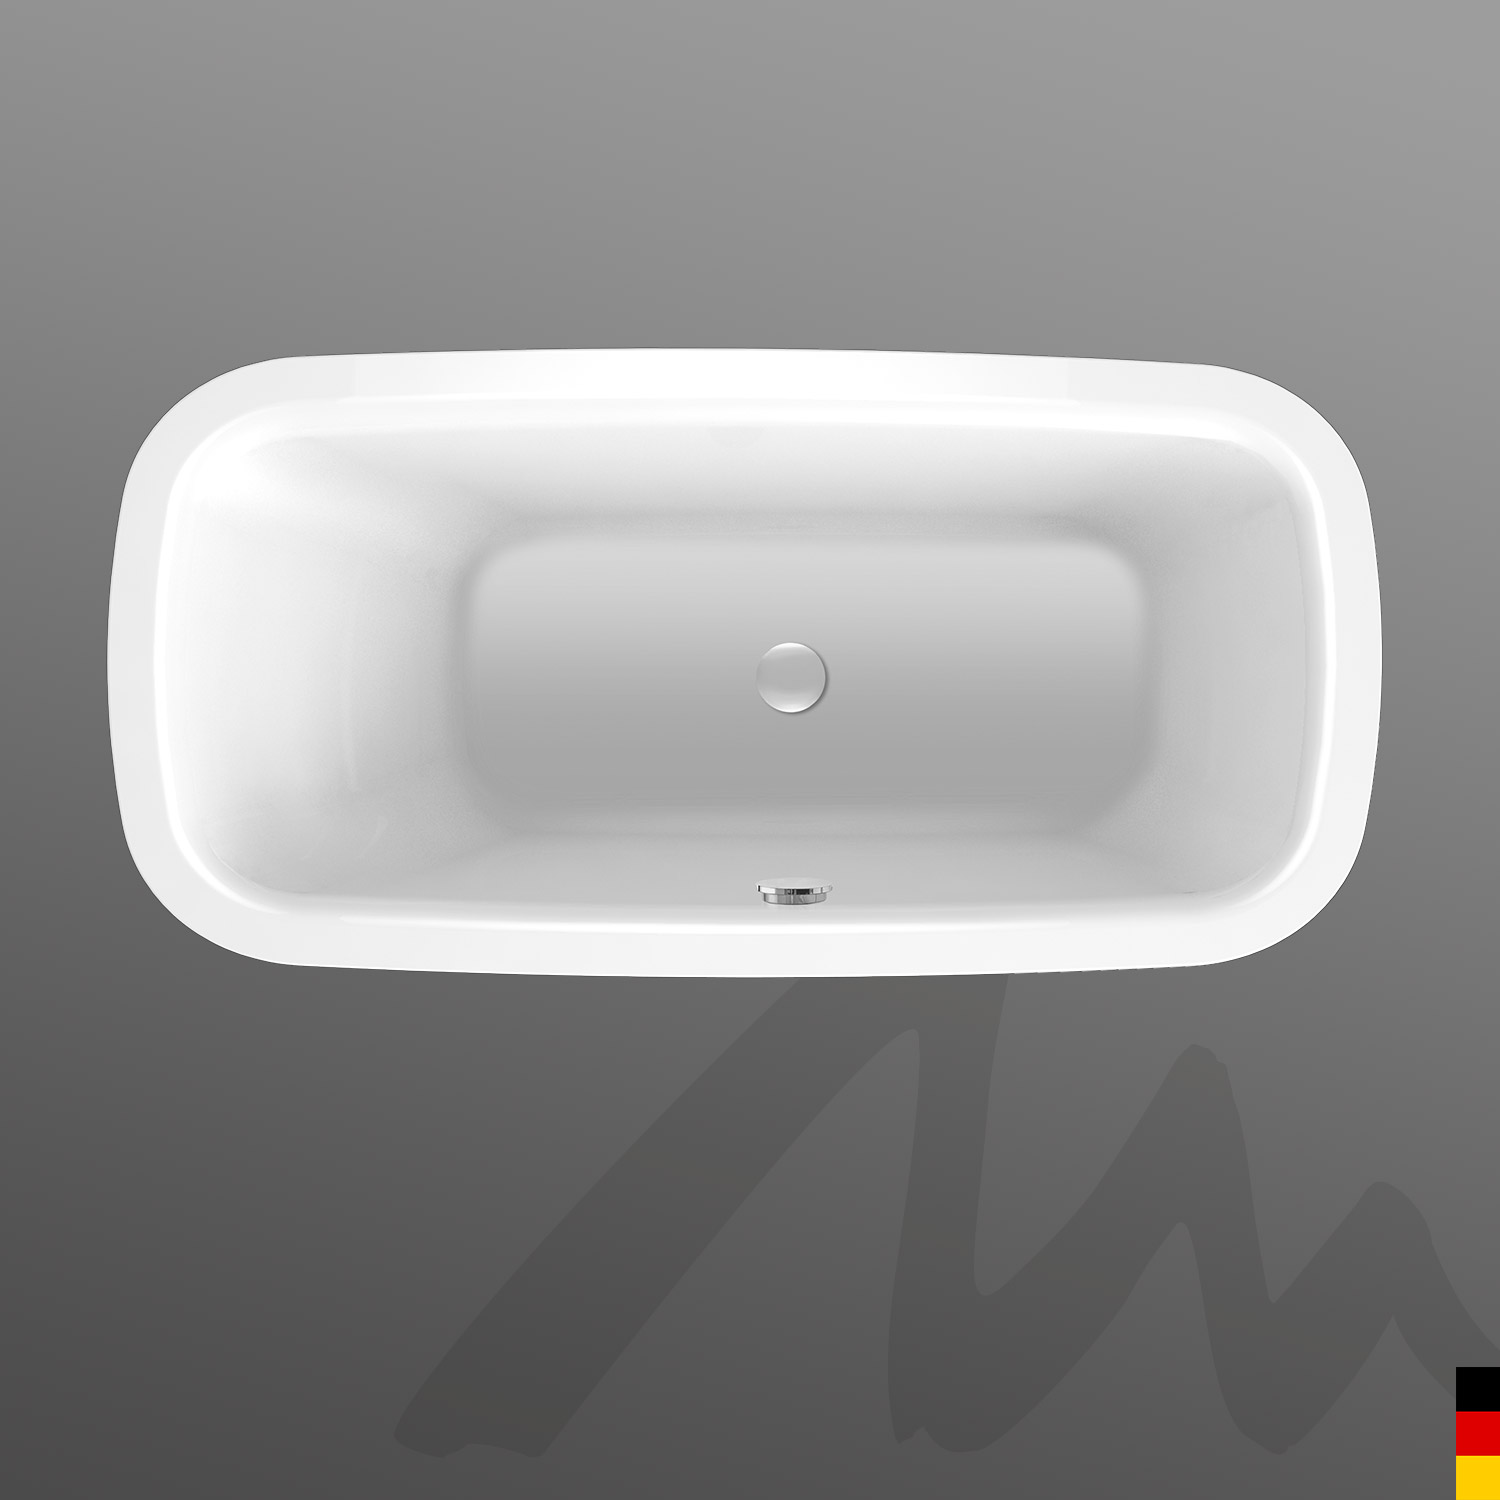 Mauersberger Badewanne Oval Nivalis Oval 180/90 uno  180x90x43cm  Farbe:weiß